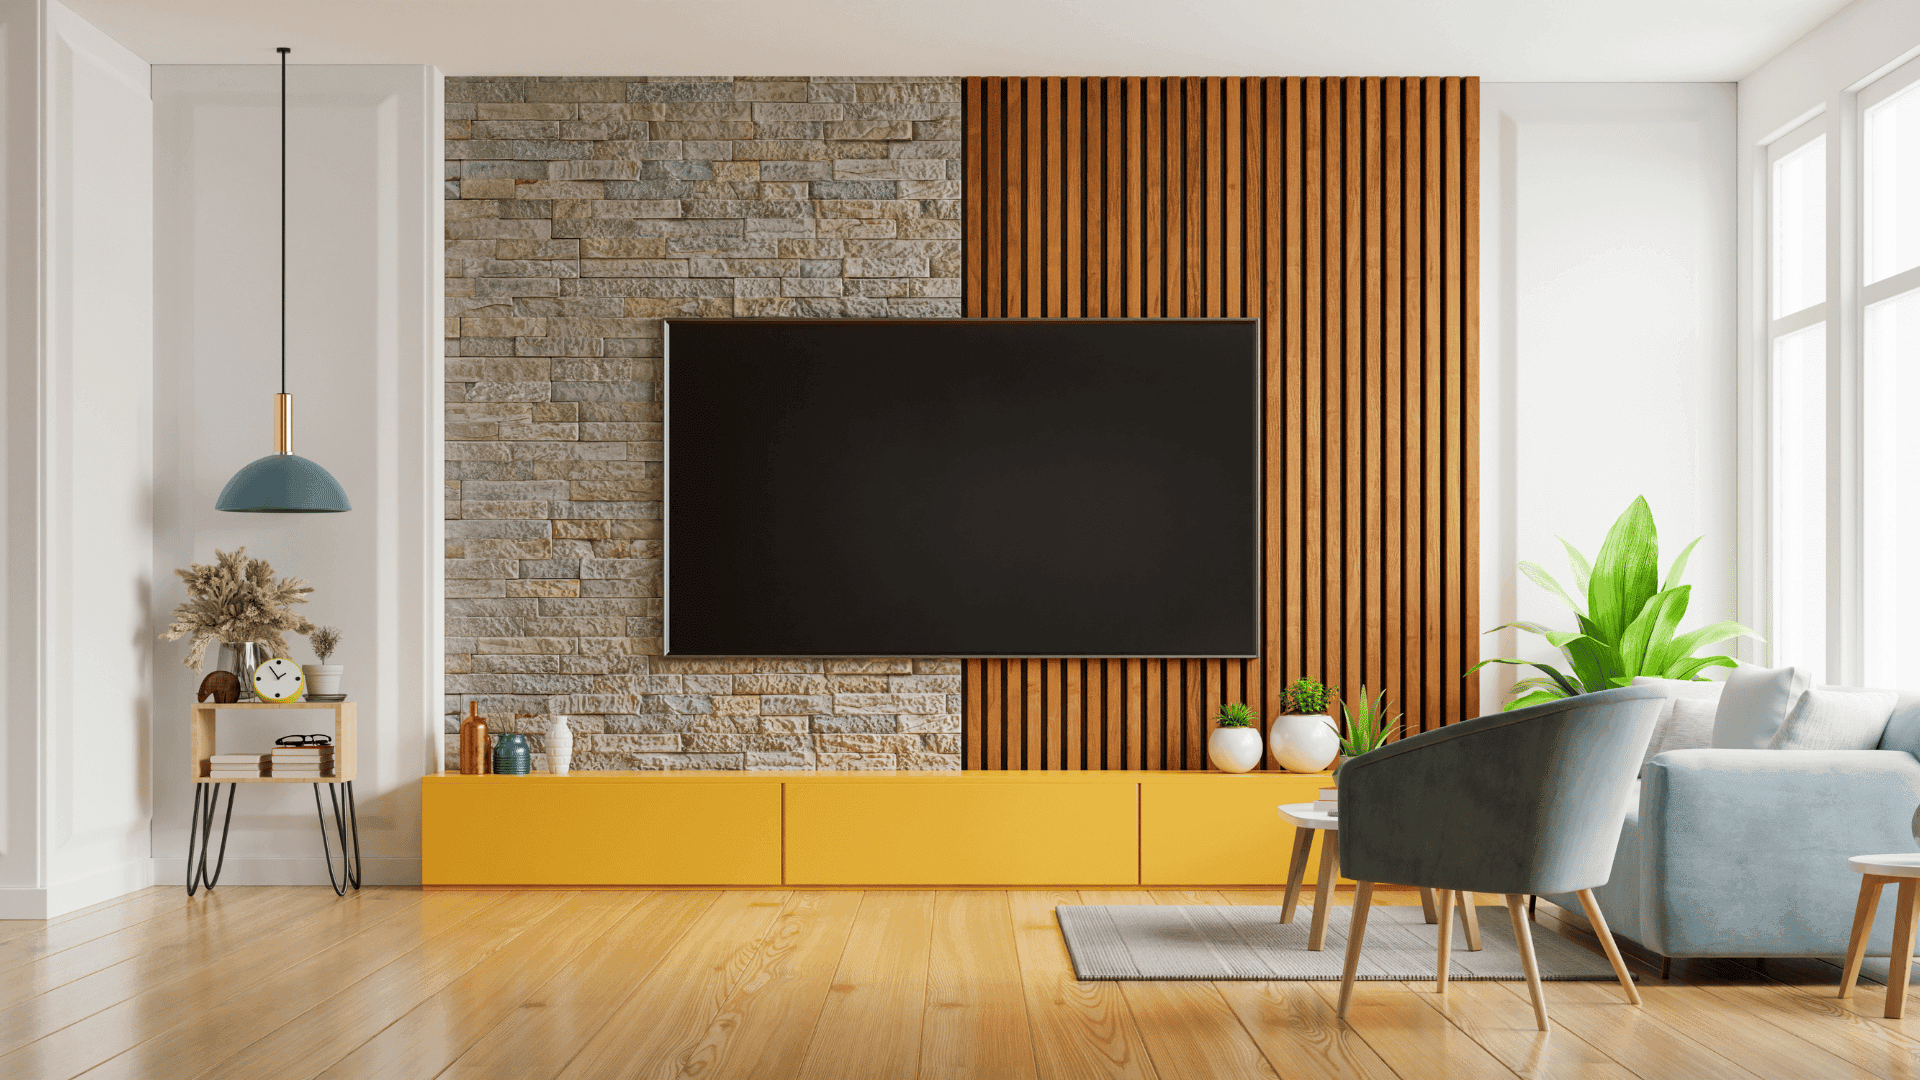 Stylish Room with Smart Tv